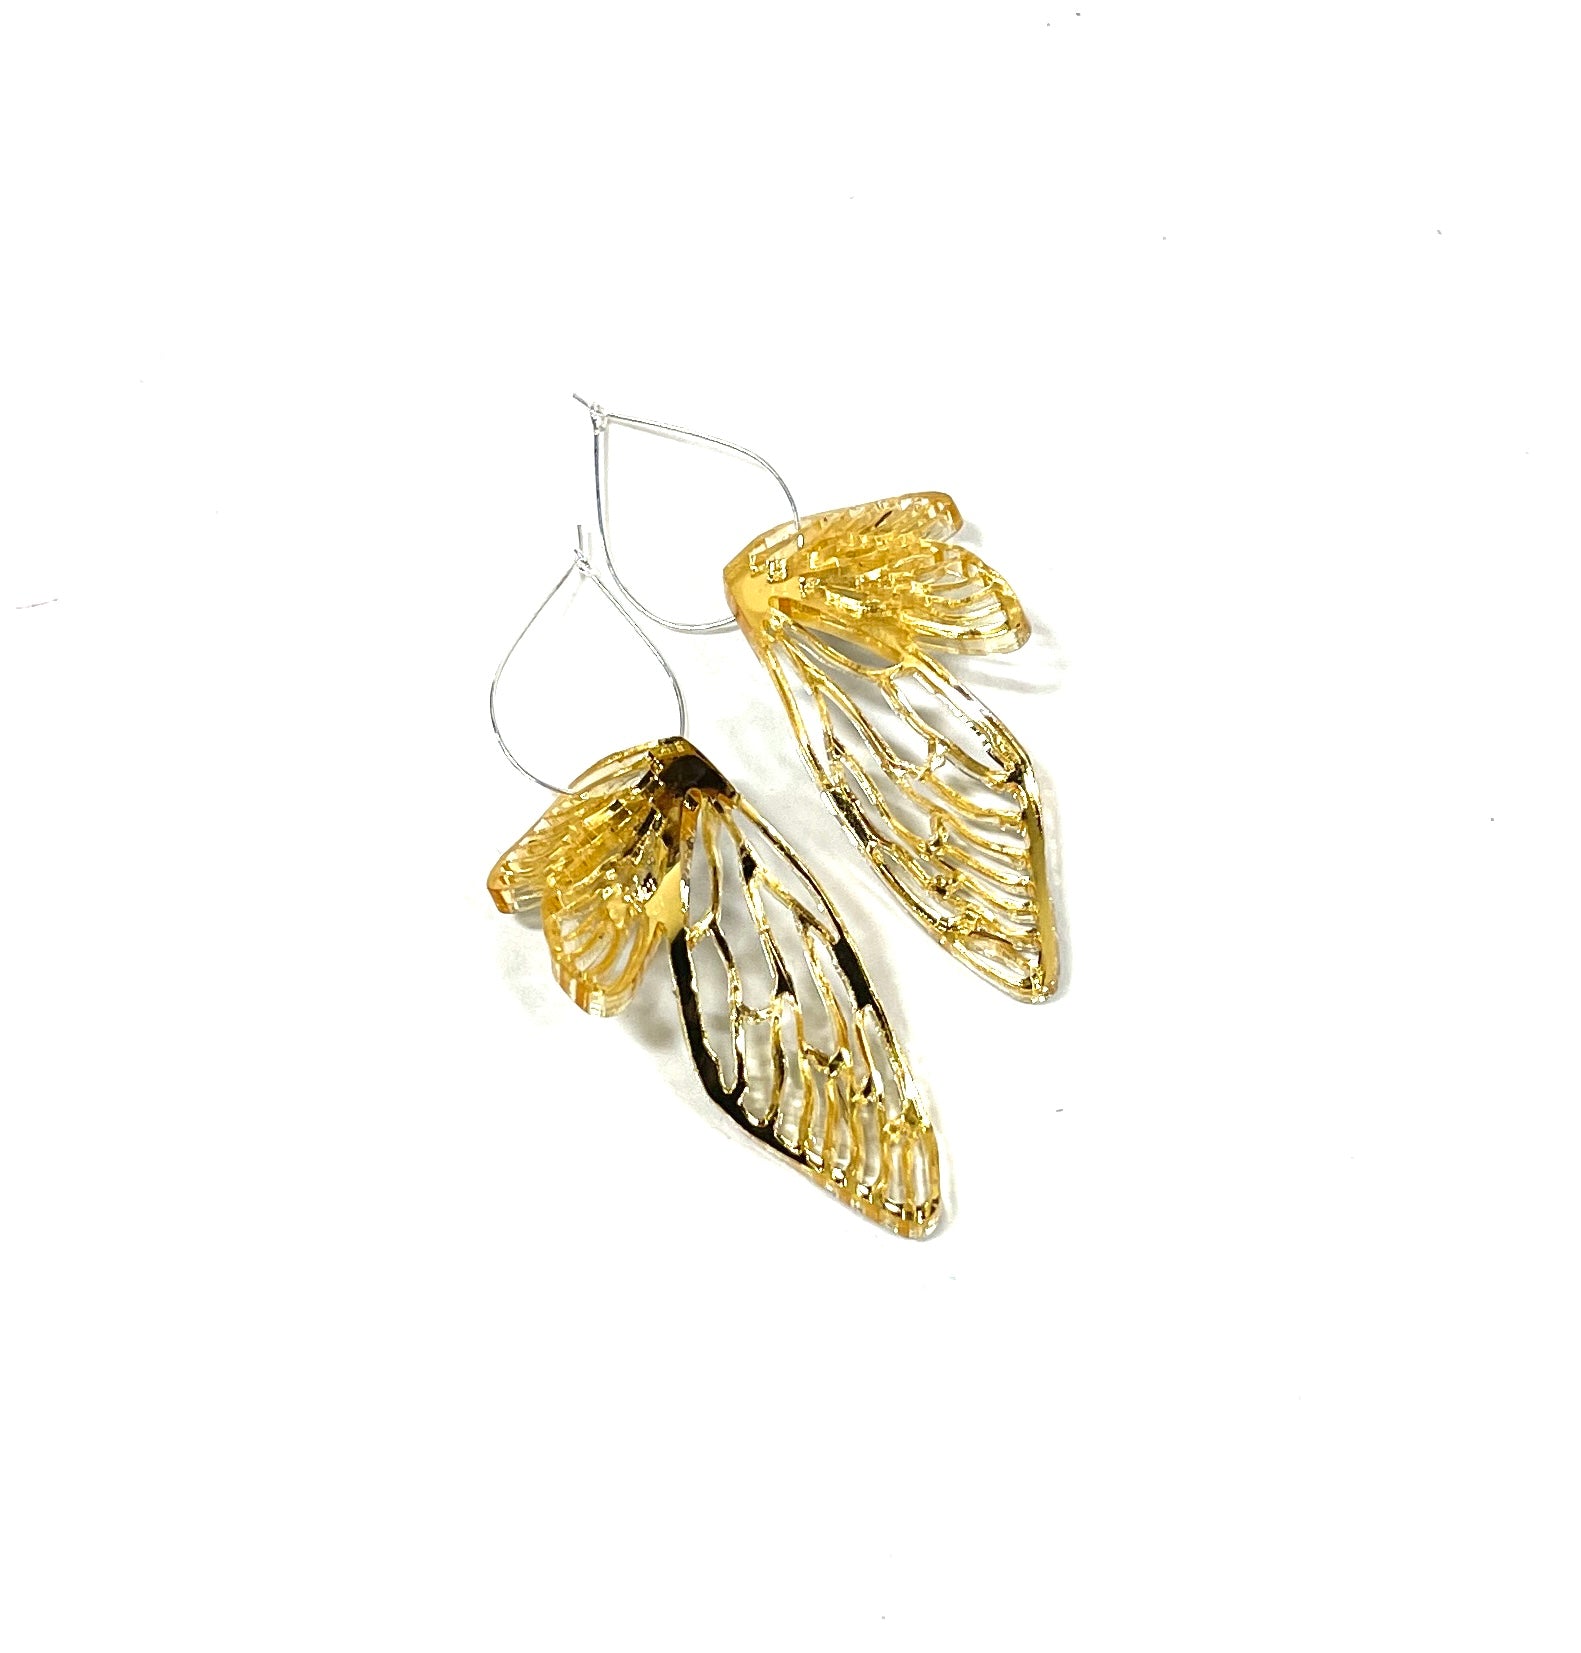 acrylic jewelry - wing earrings - gold mirror